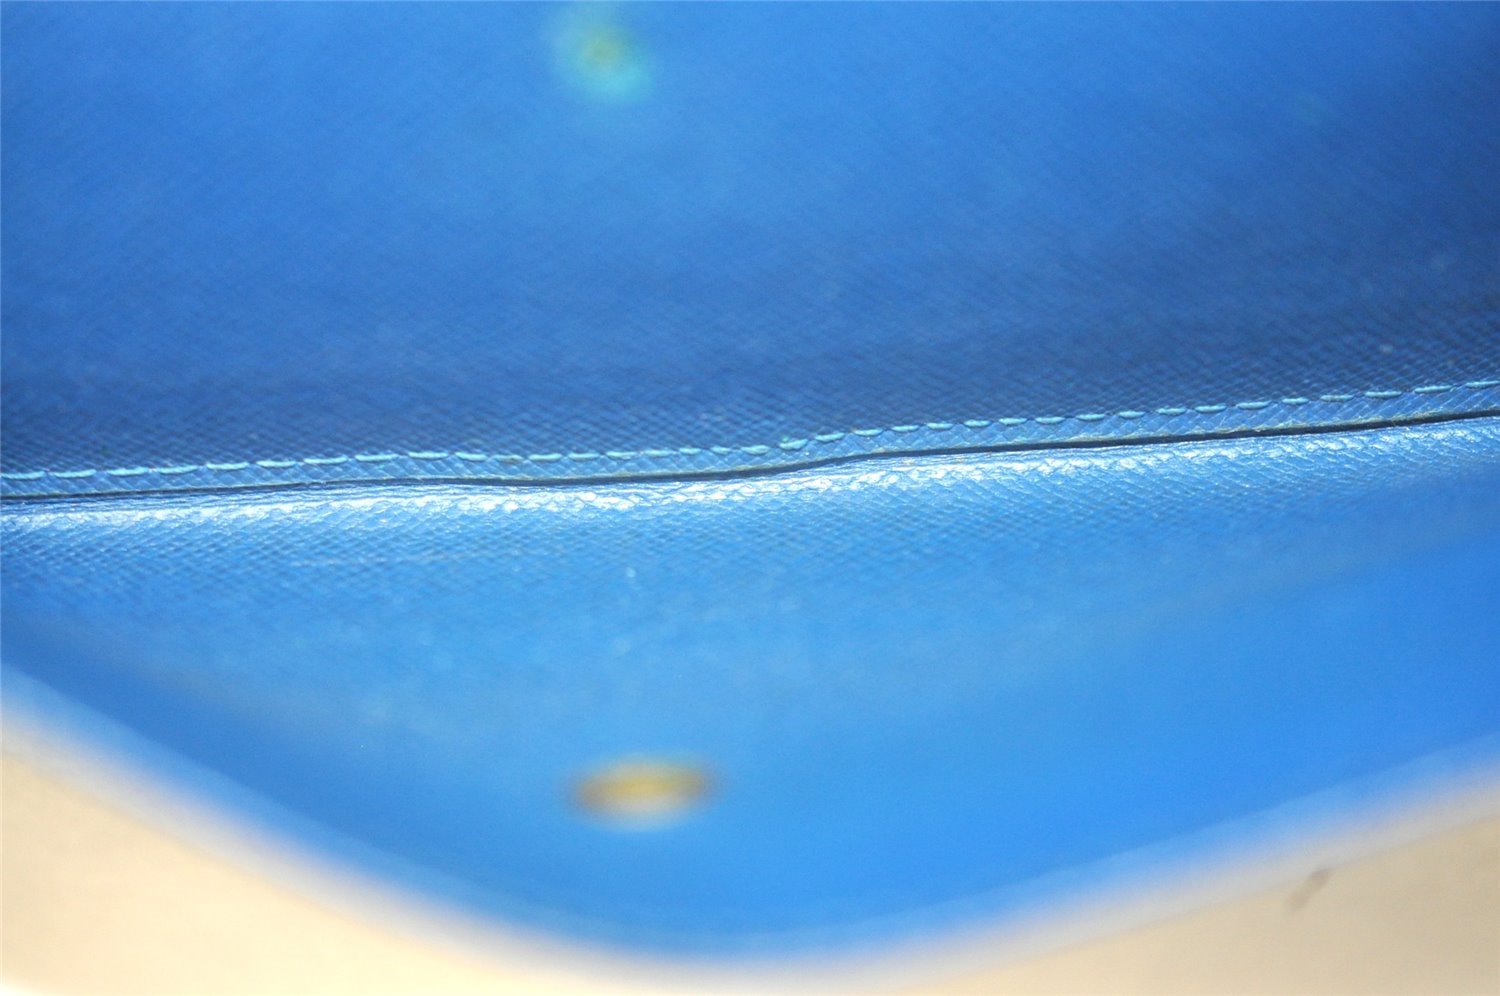 Auth Louis Vuitton Epi Porte Tresor International Wallet Blue M63385 Junk 6709J